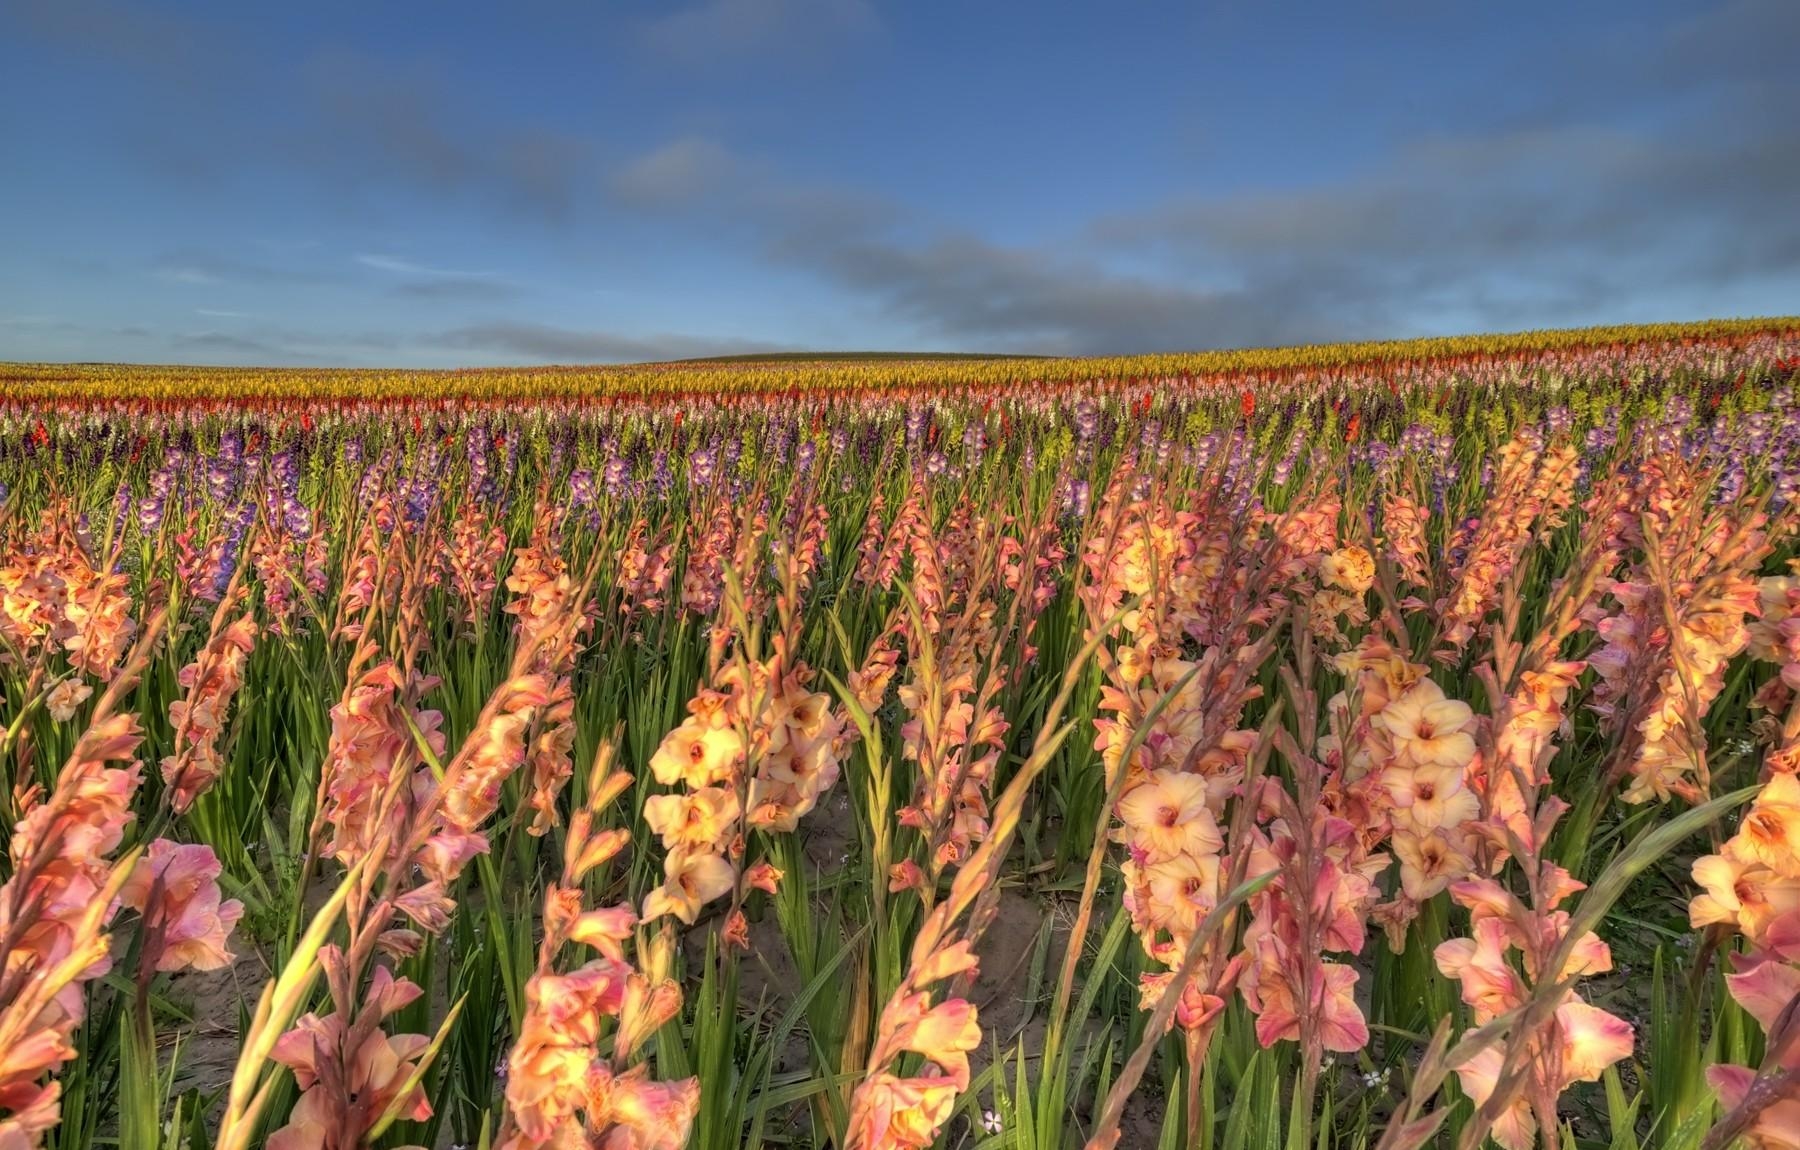 Download wallpaper 1800x1150 gladiolus, flowers, field, sky, horizon